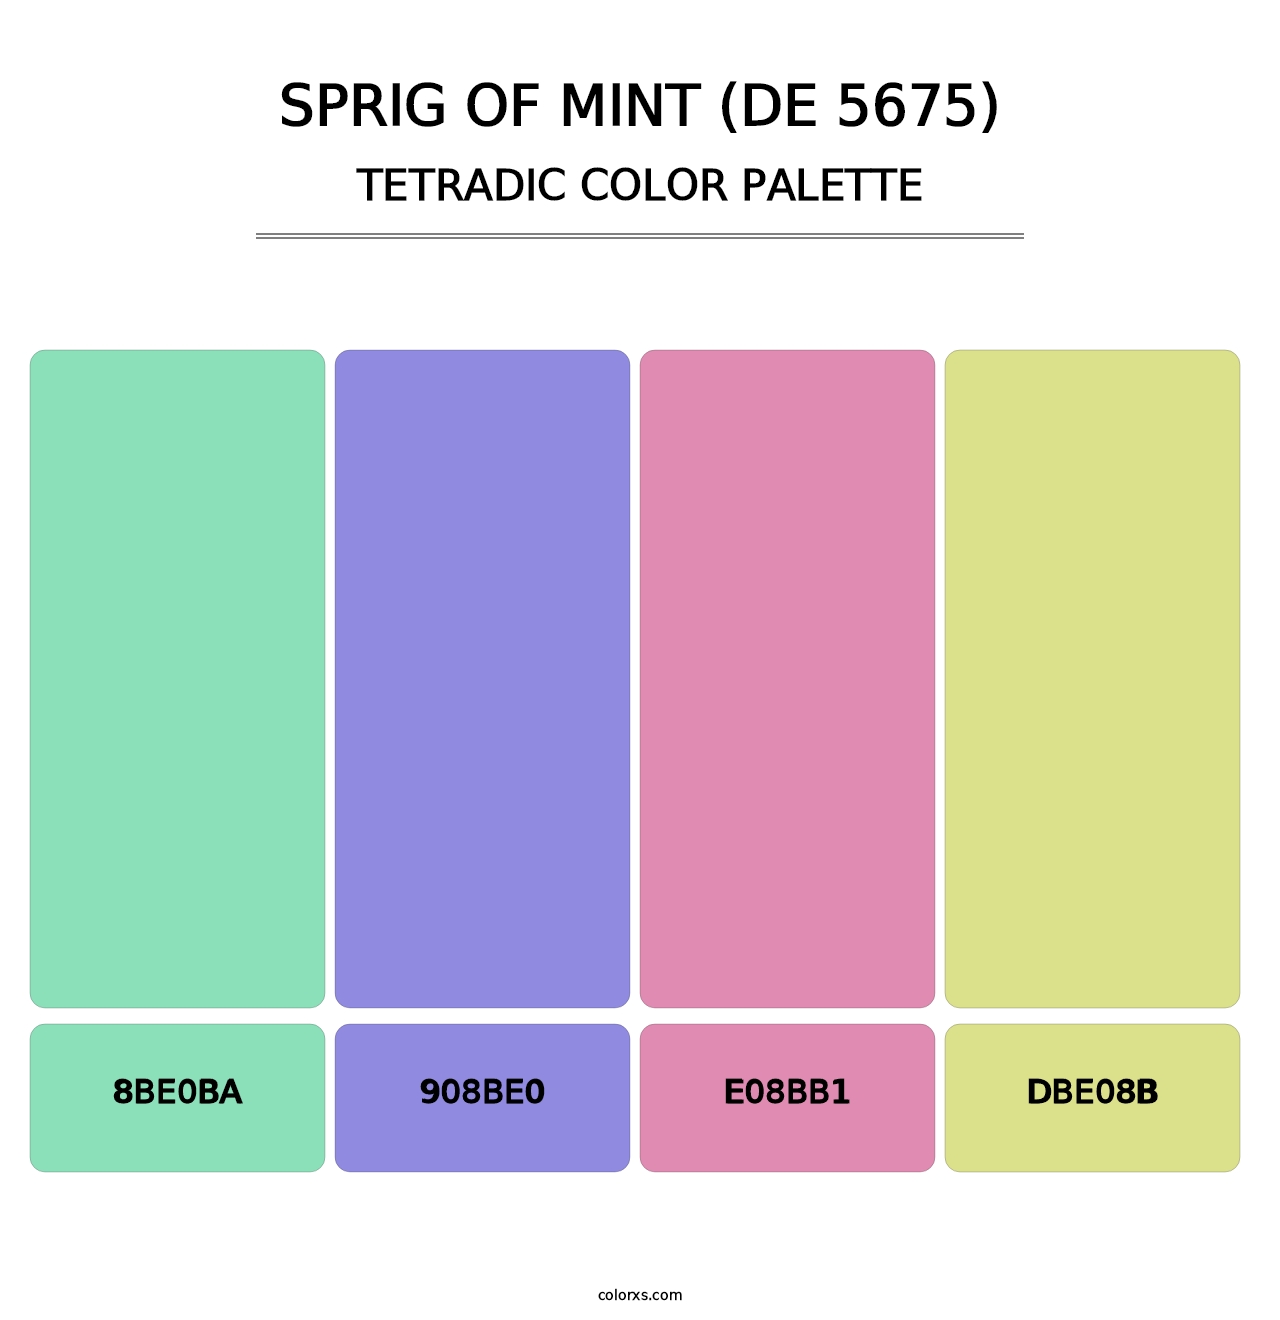 Sprig of Mint (DE 5675) - Tetradic Color Palette